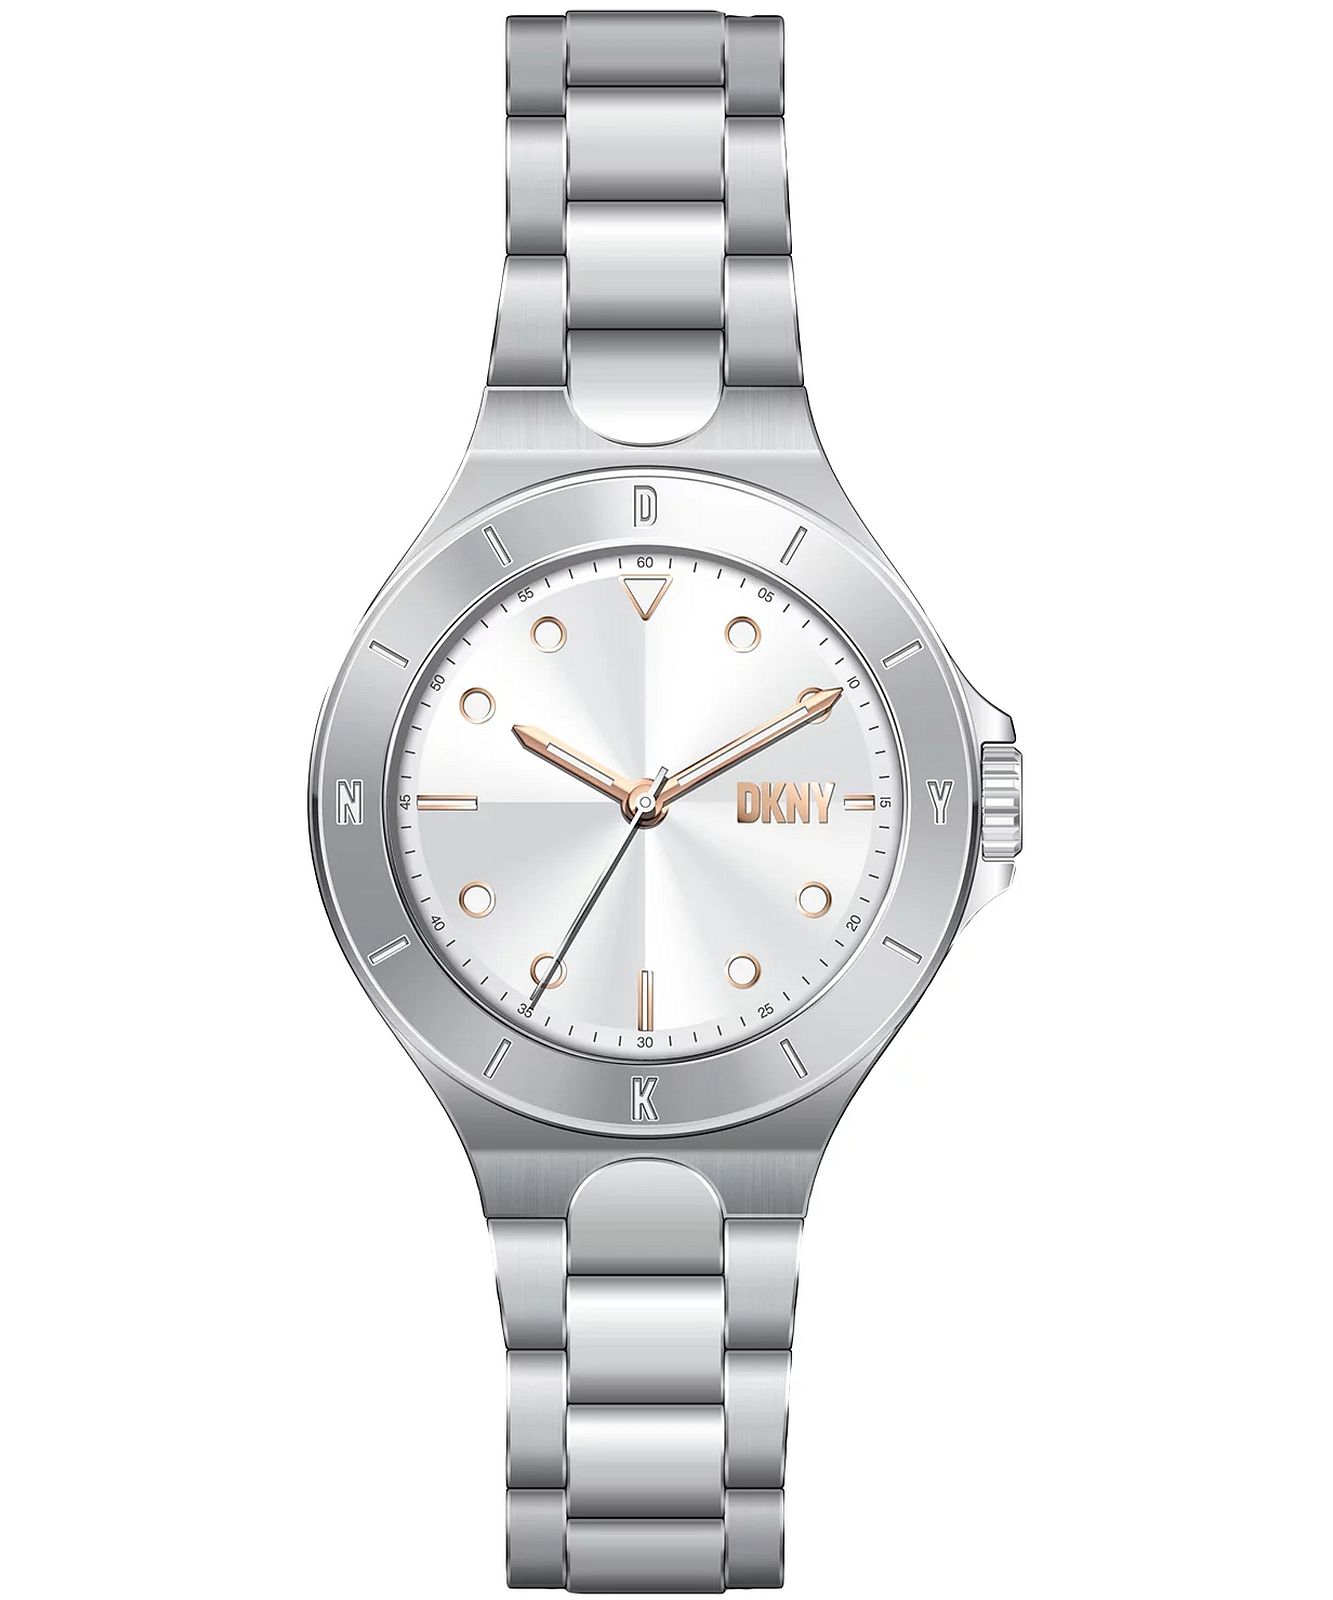 Fossil ES2147 - Charm Bracelet Watch • Watchard.com